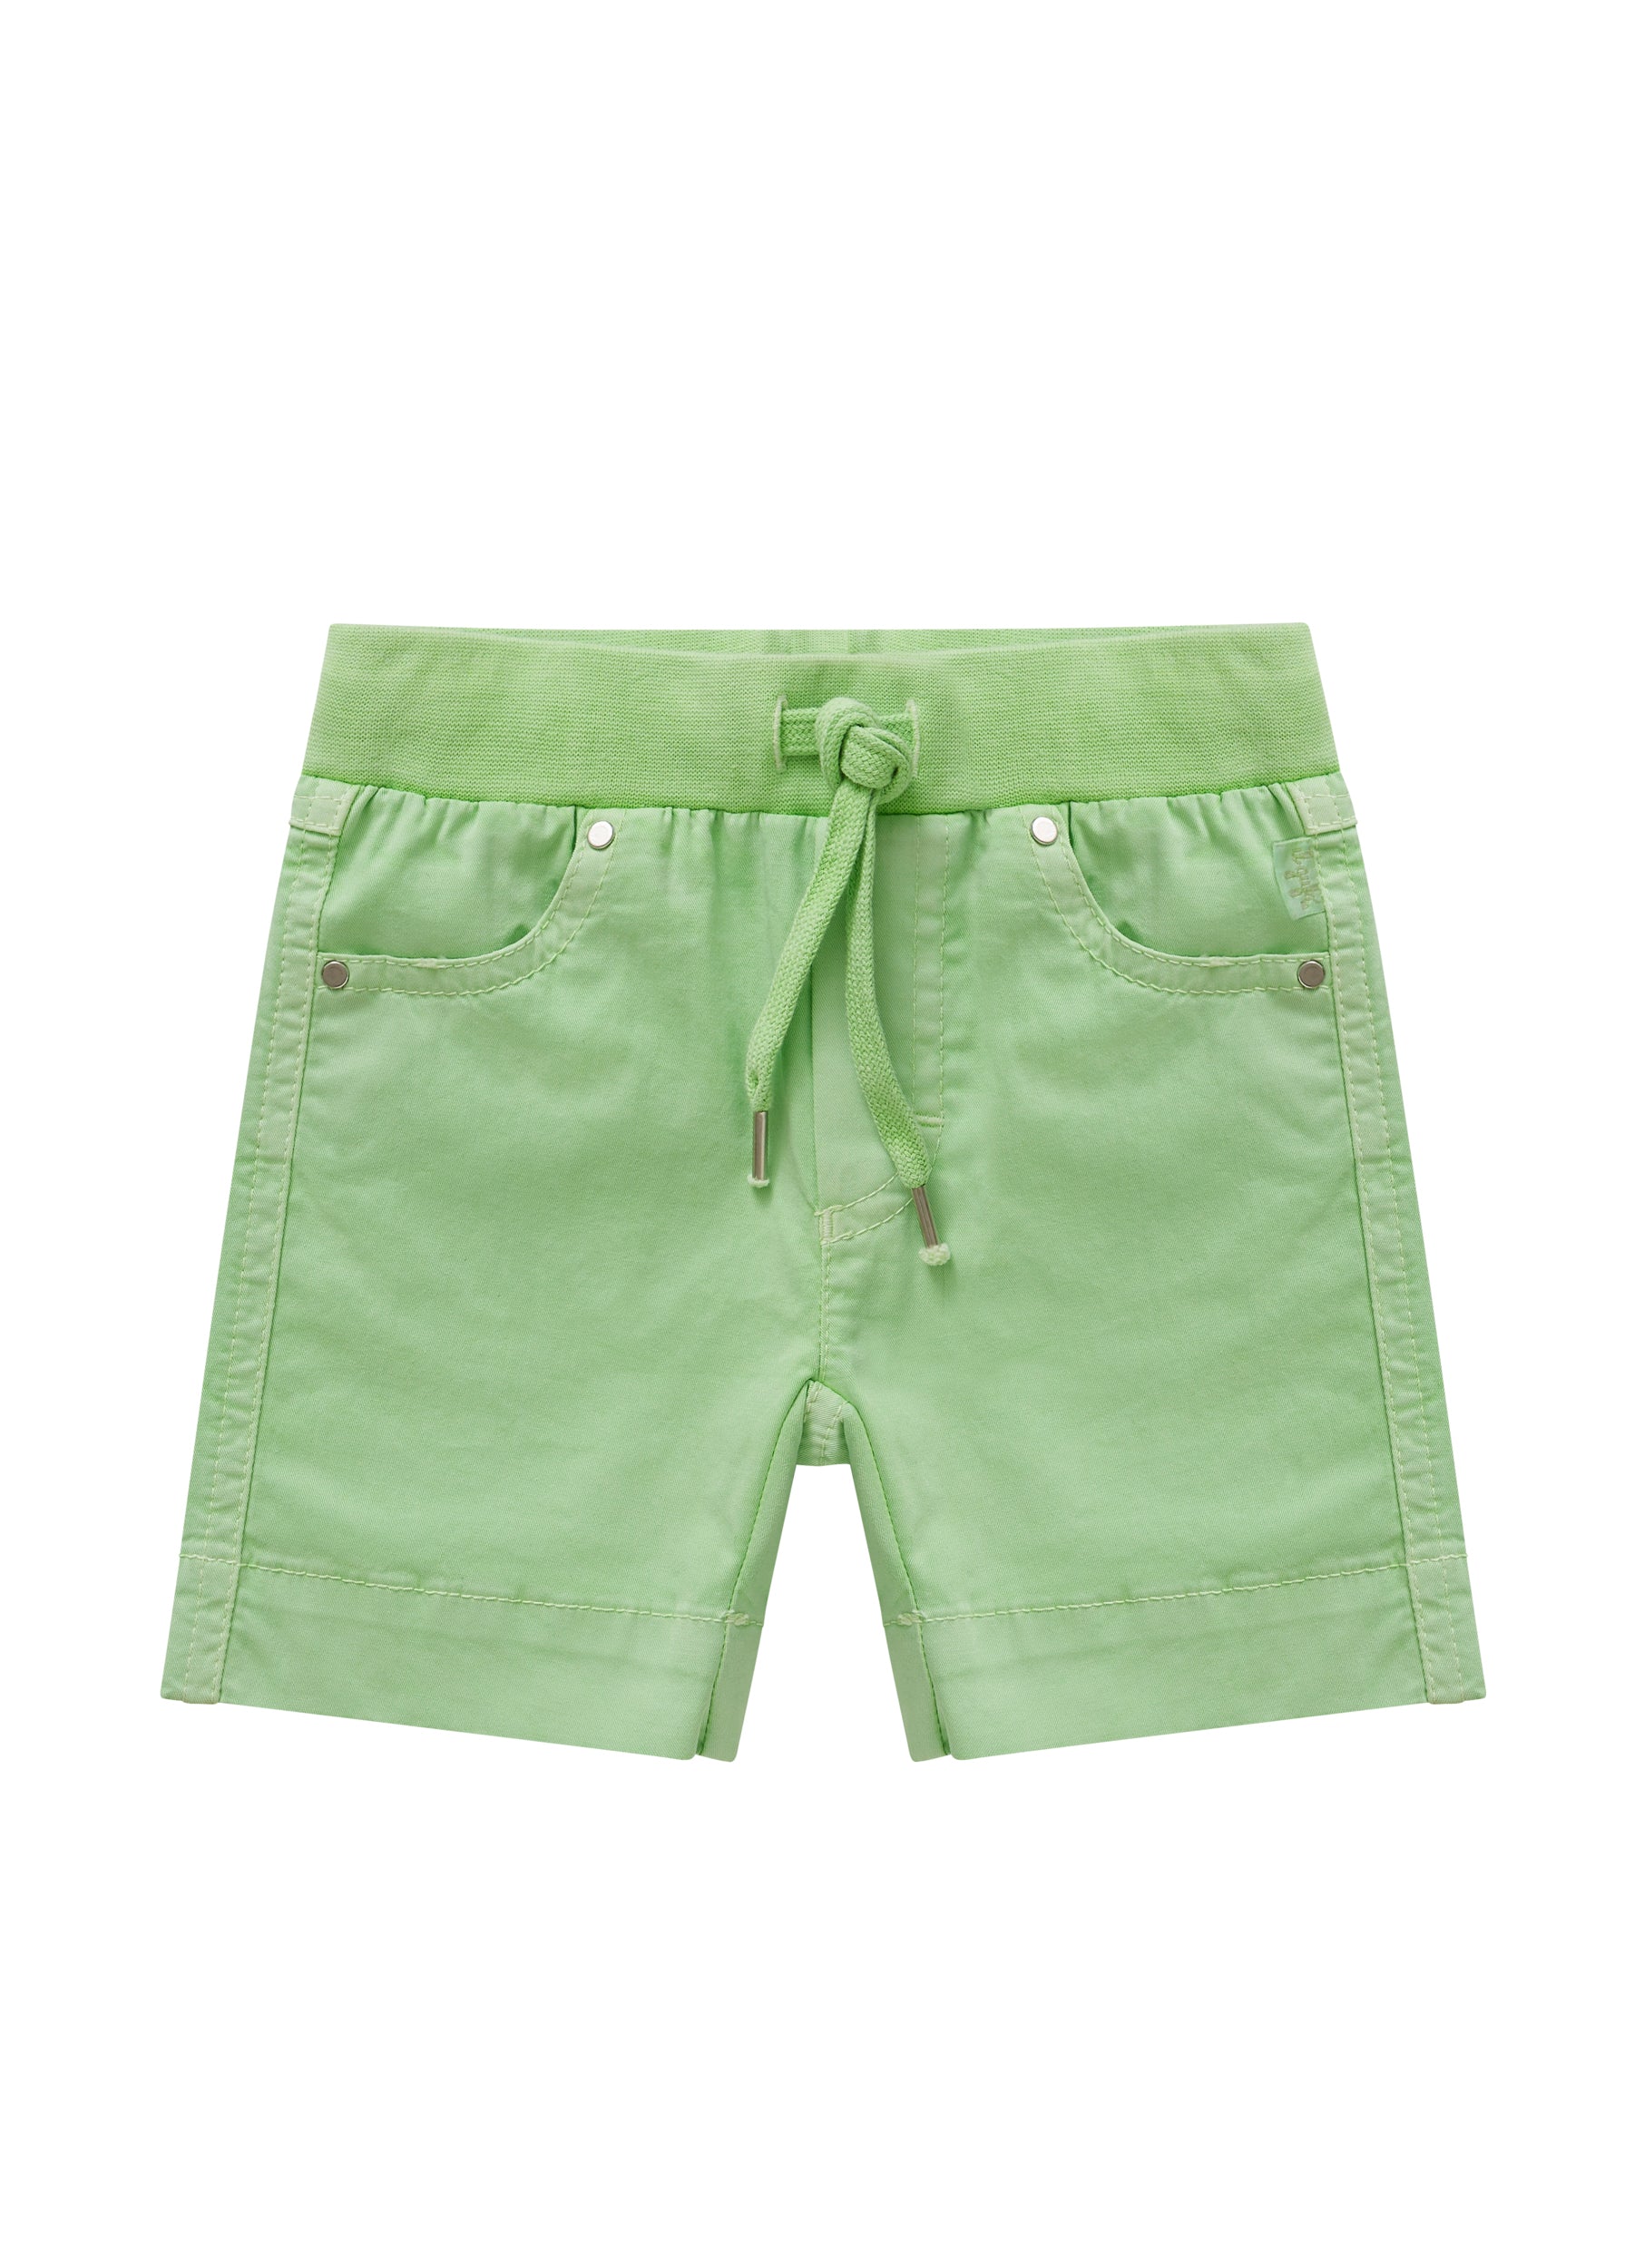 Boys Fluorescent Green Shorts